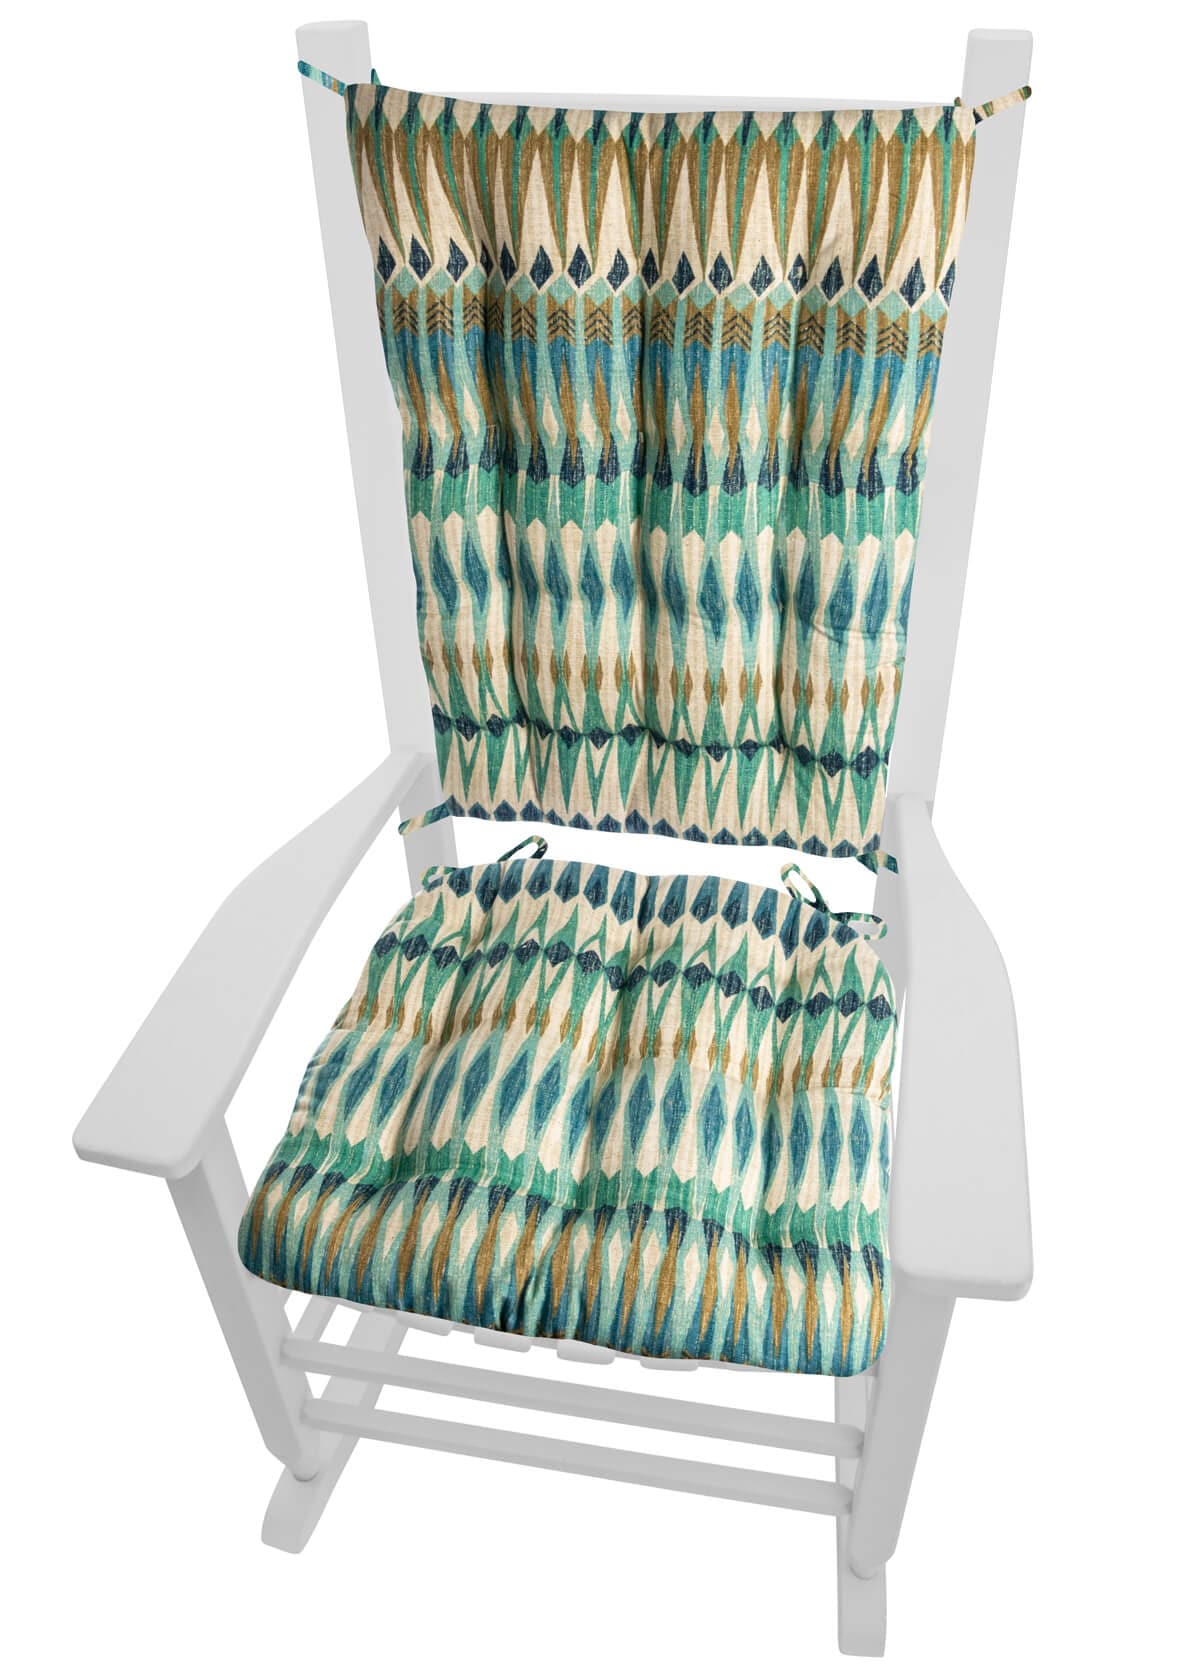 Southwest Arapaho Rocking Chair Cushions - Barnett Home Decor - Aqua, Teal, & Gold